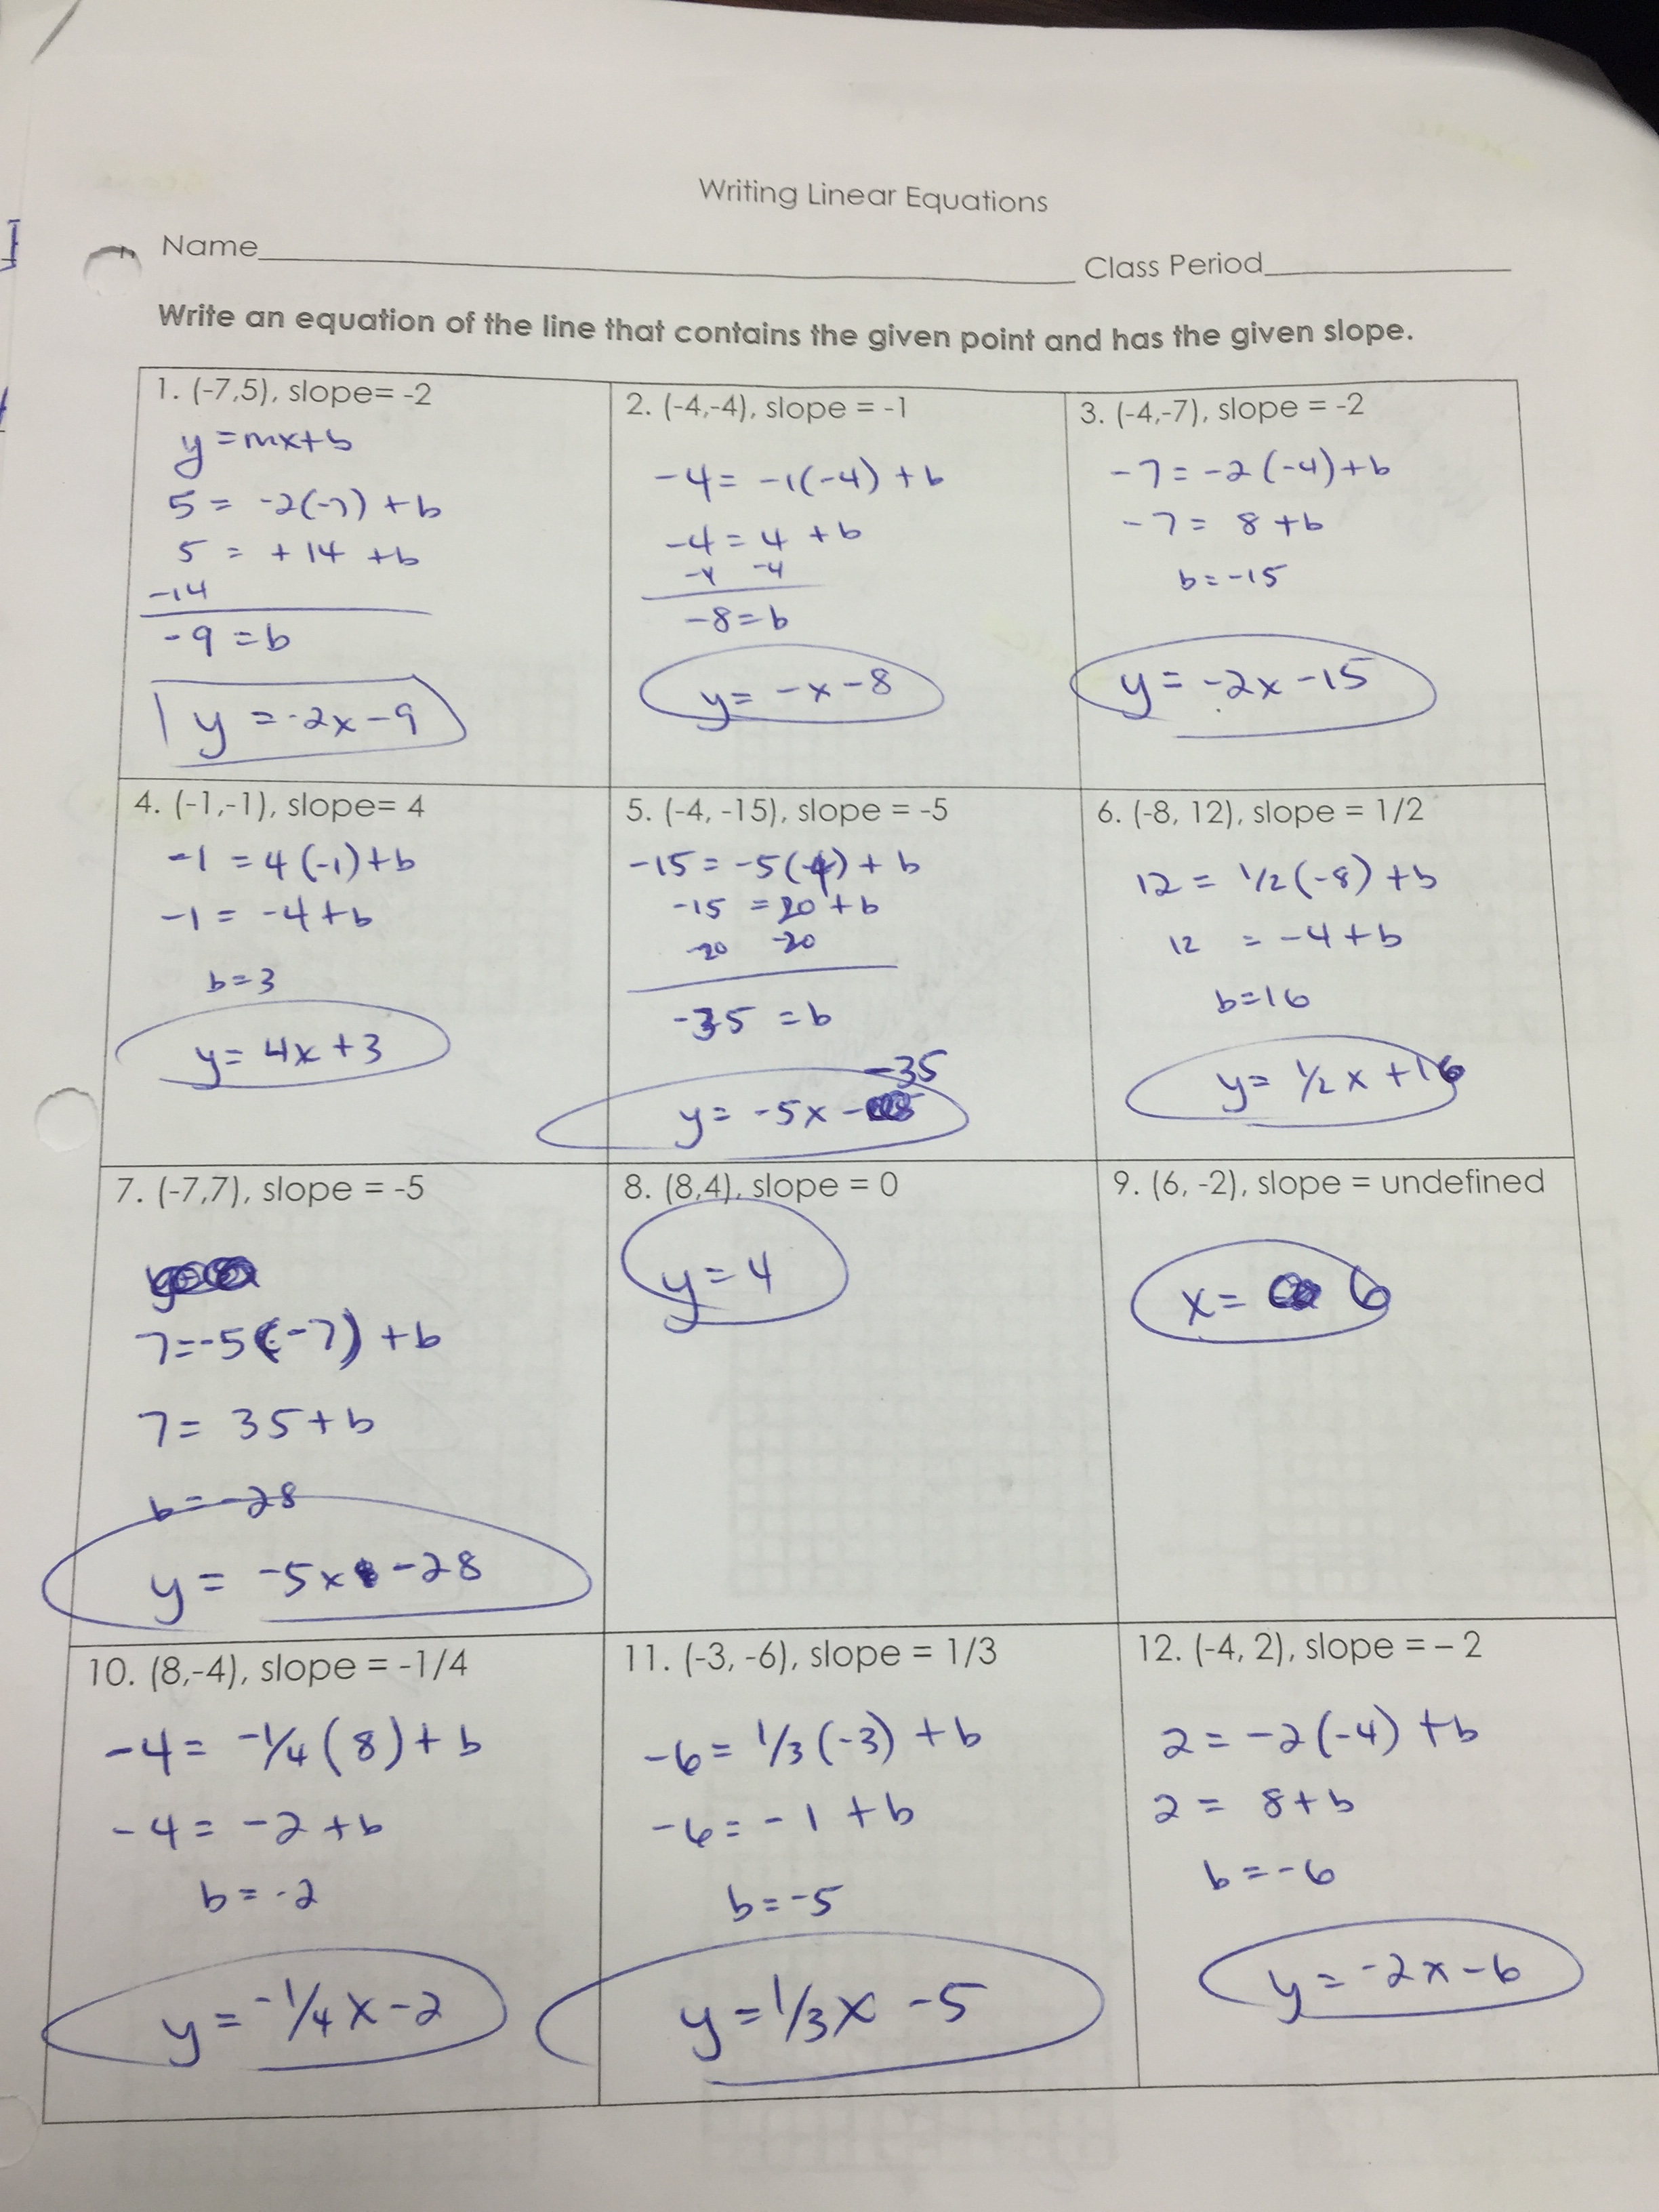 Gina wilson all things algebra unit 2 homework 6